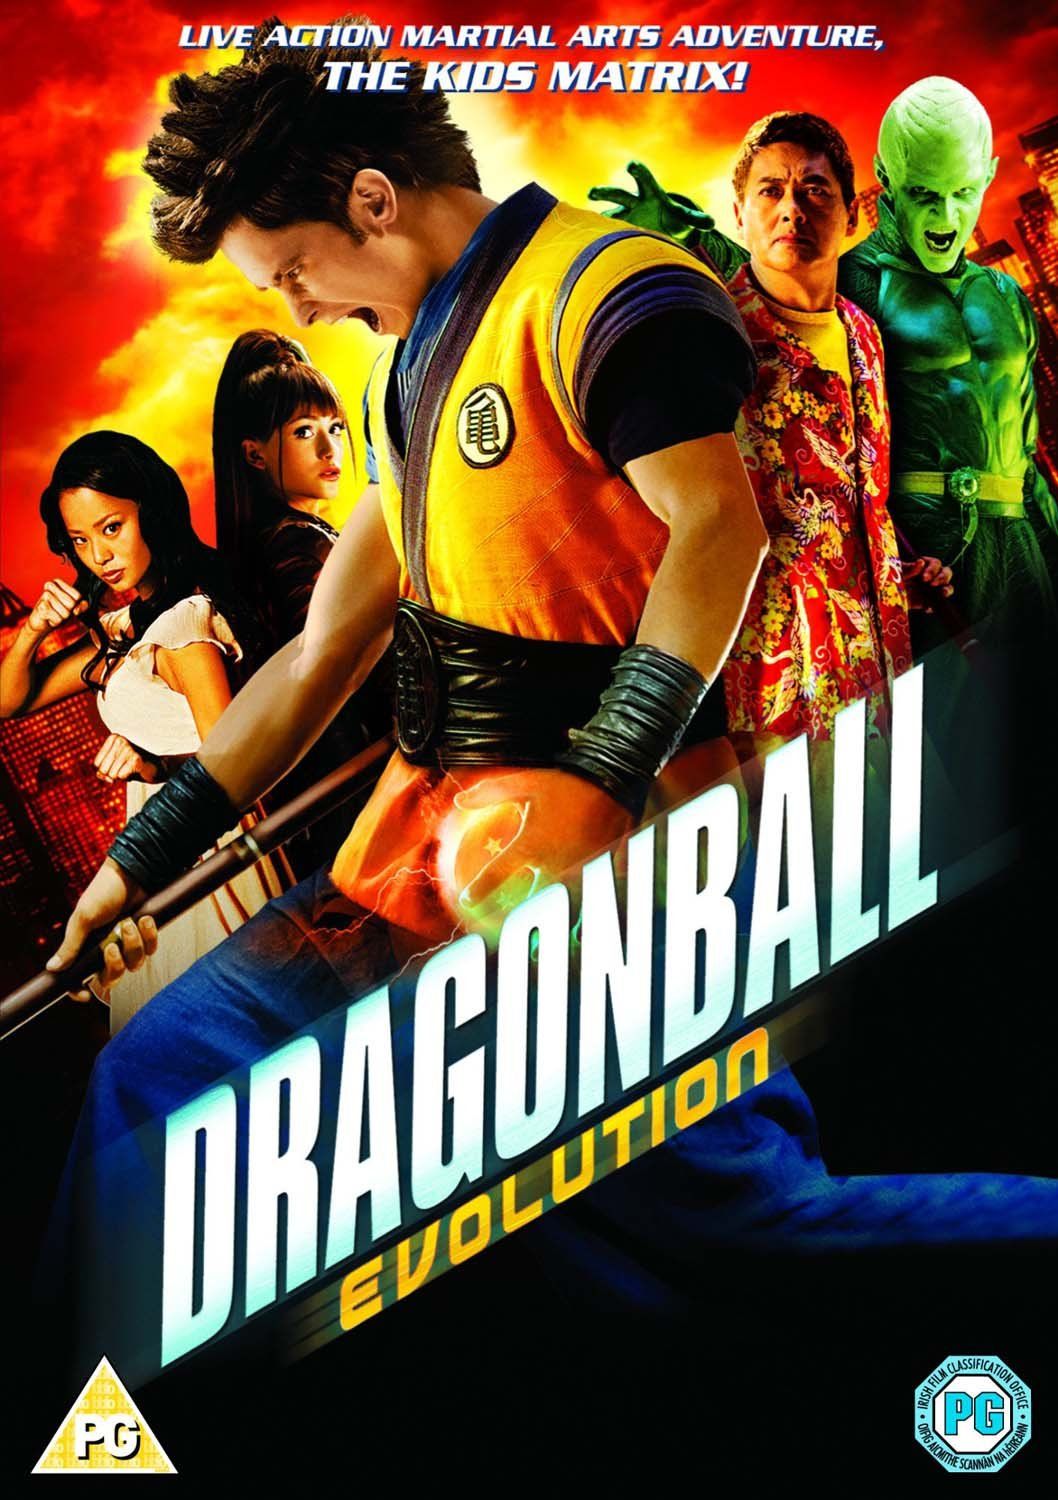 Dragonball Evolution: Movies & TV